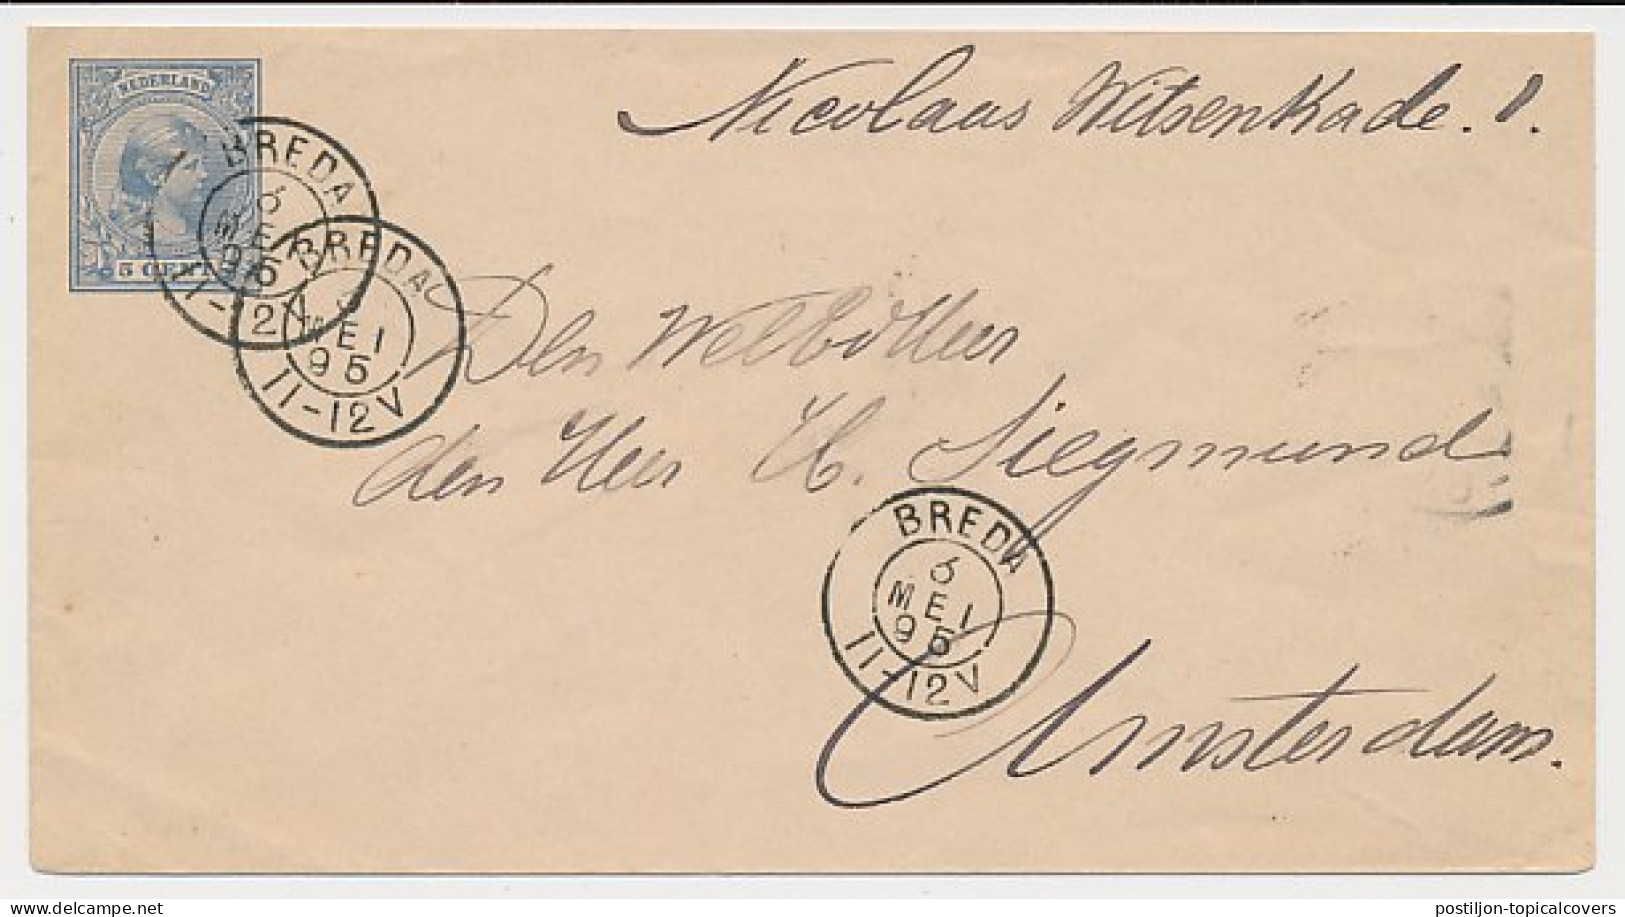 Envelop G. 5 C Breda - Amsterdam 1895 - Entiers Postaux